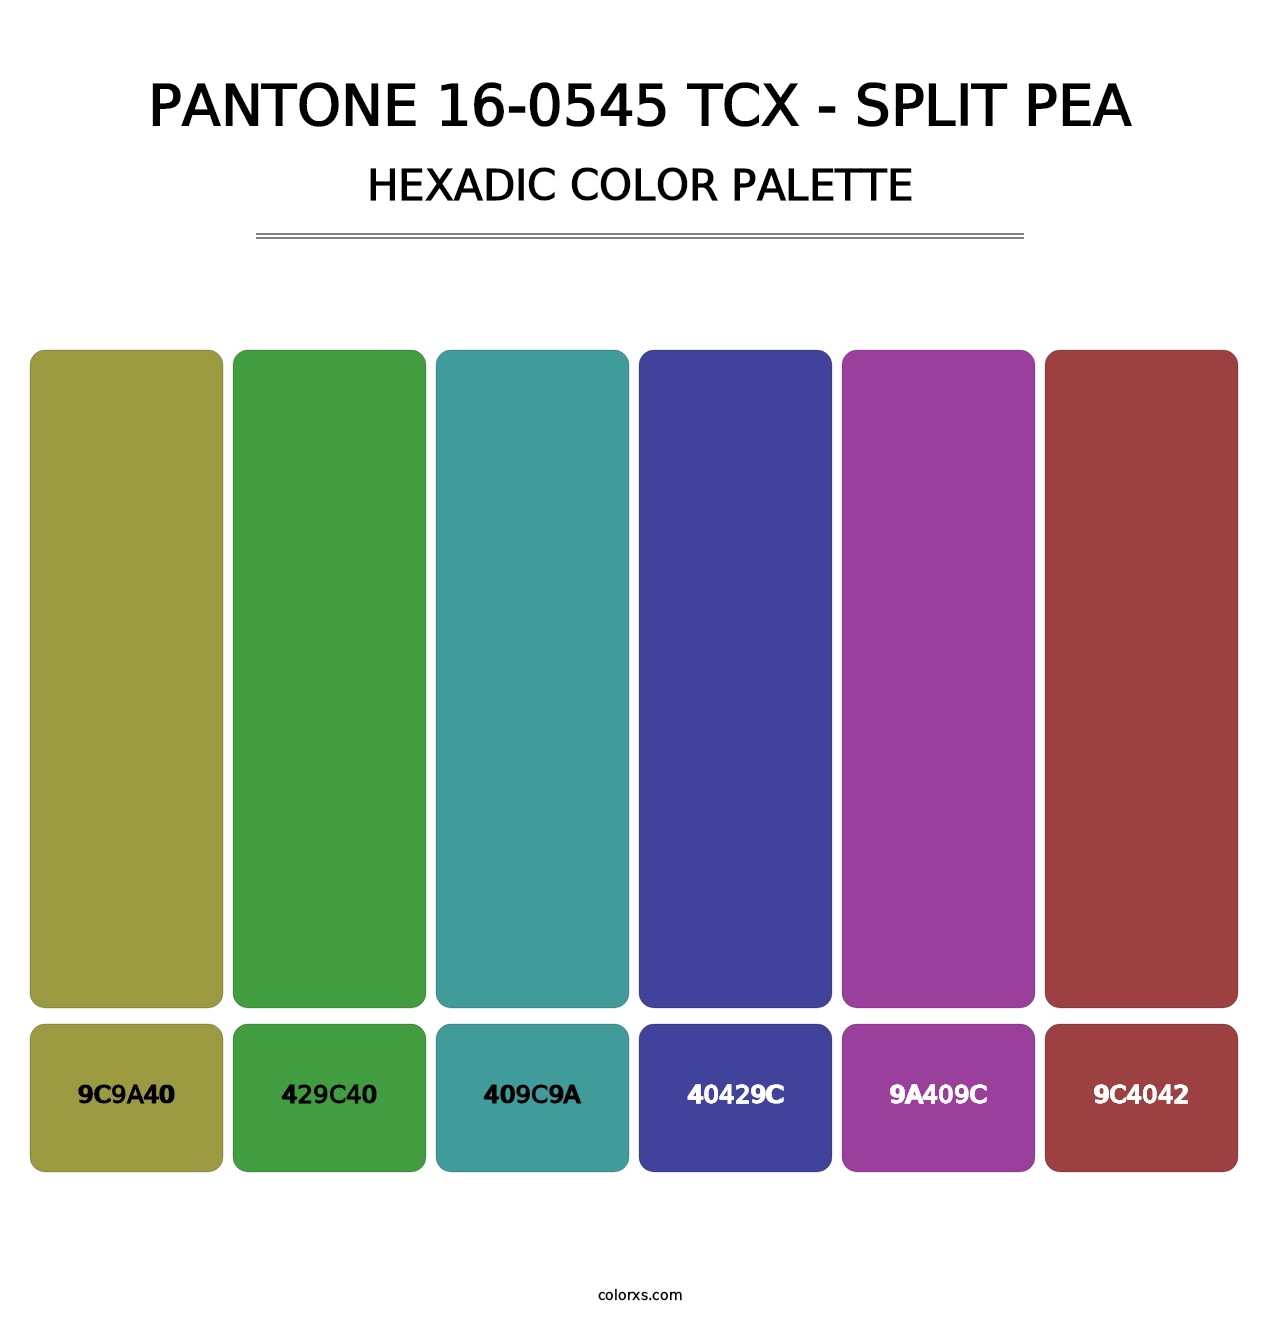 PANTONE 16-0545 TCX - Split Pea - Hexadic Color Palette